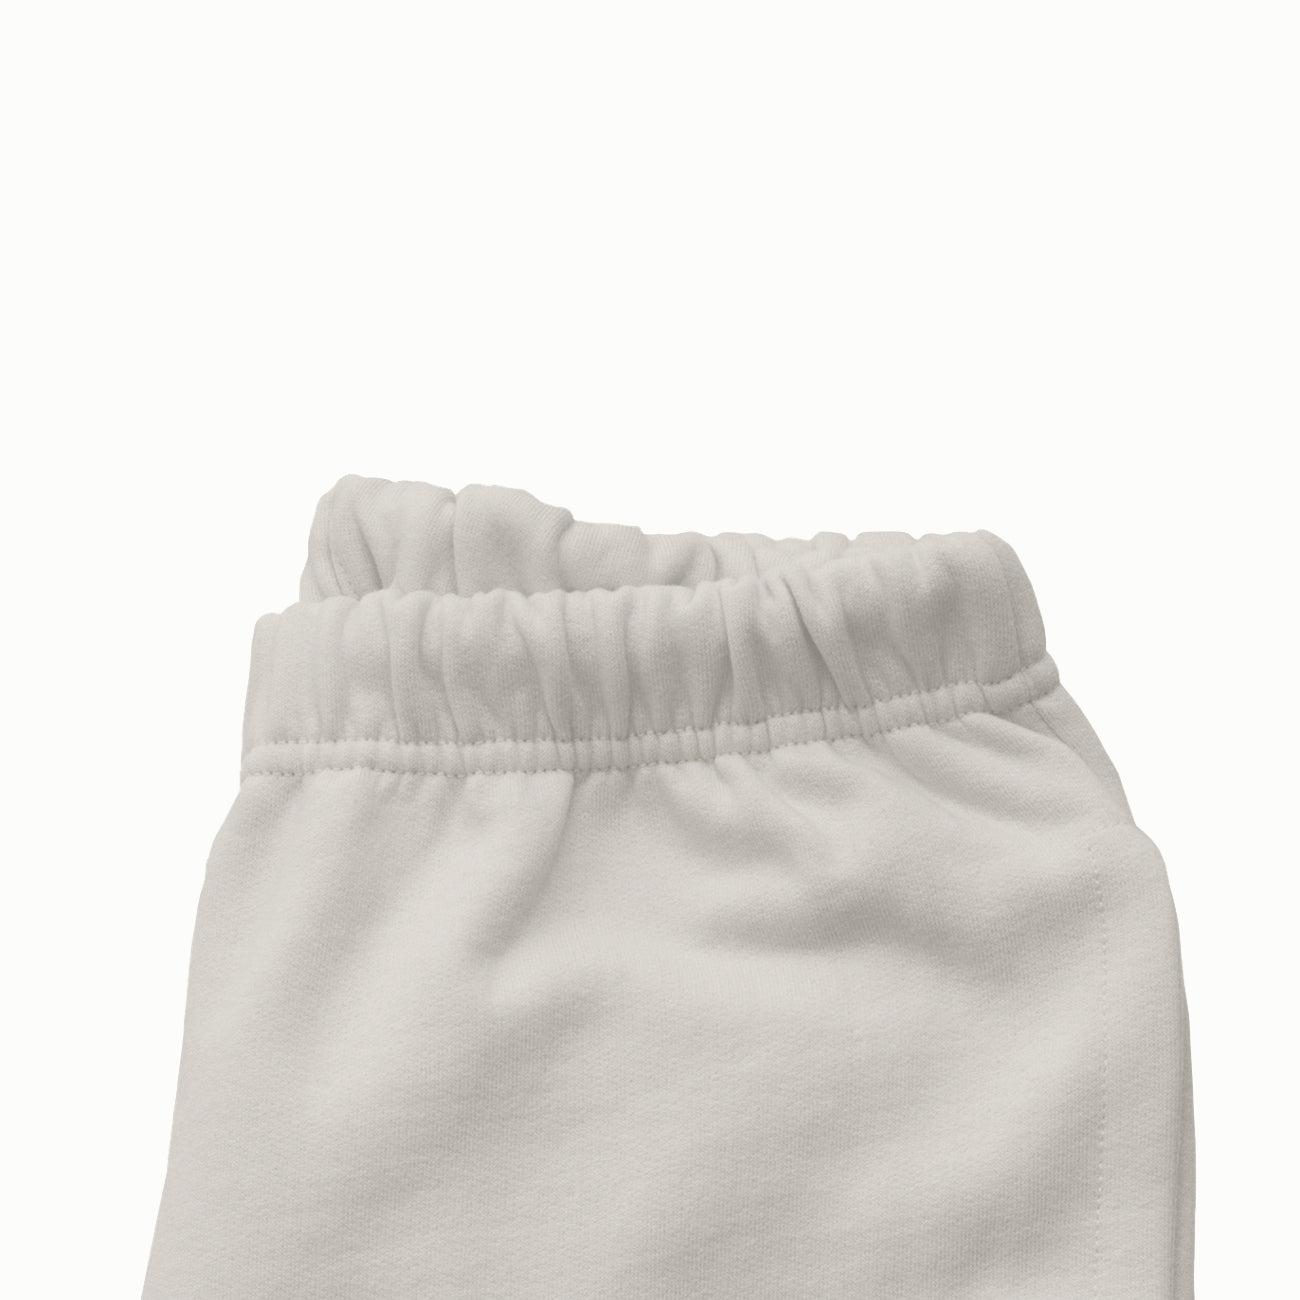 Folded Sweatpants 002 Mockup (Front)